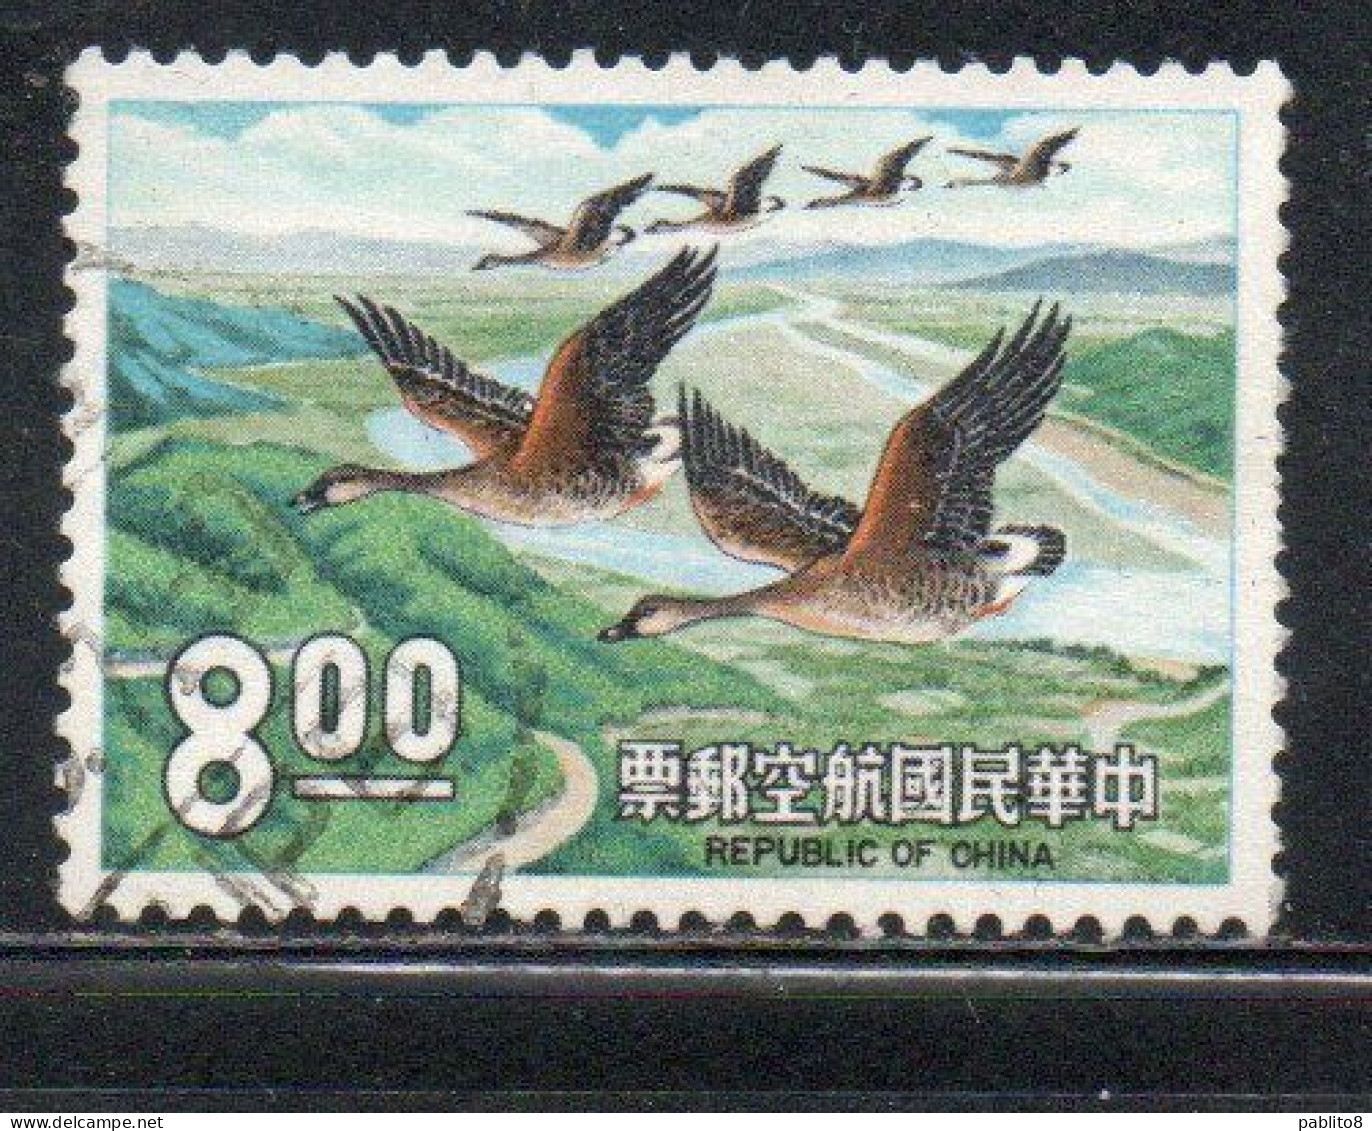 CHINA REPUBLIC CINA TAIWAN FORMOSA 1969 AIR POST MAIL AIRMAIL BIRD FAUNA BIRDS WILD GEESE FLIGT LAND 8$ USED USATO - Poste Aérienne